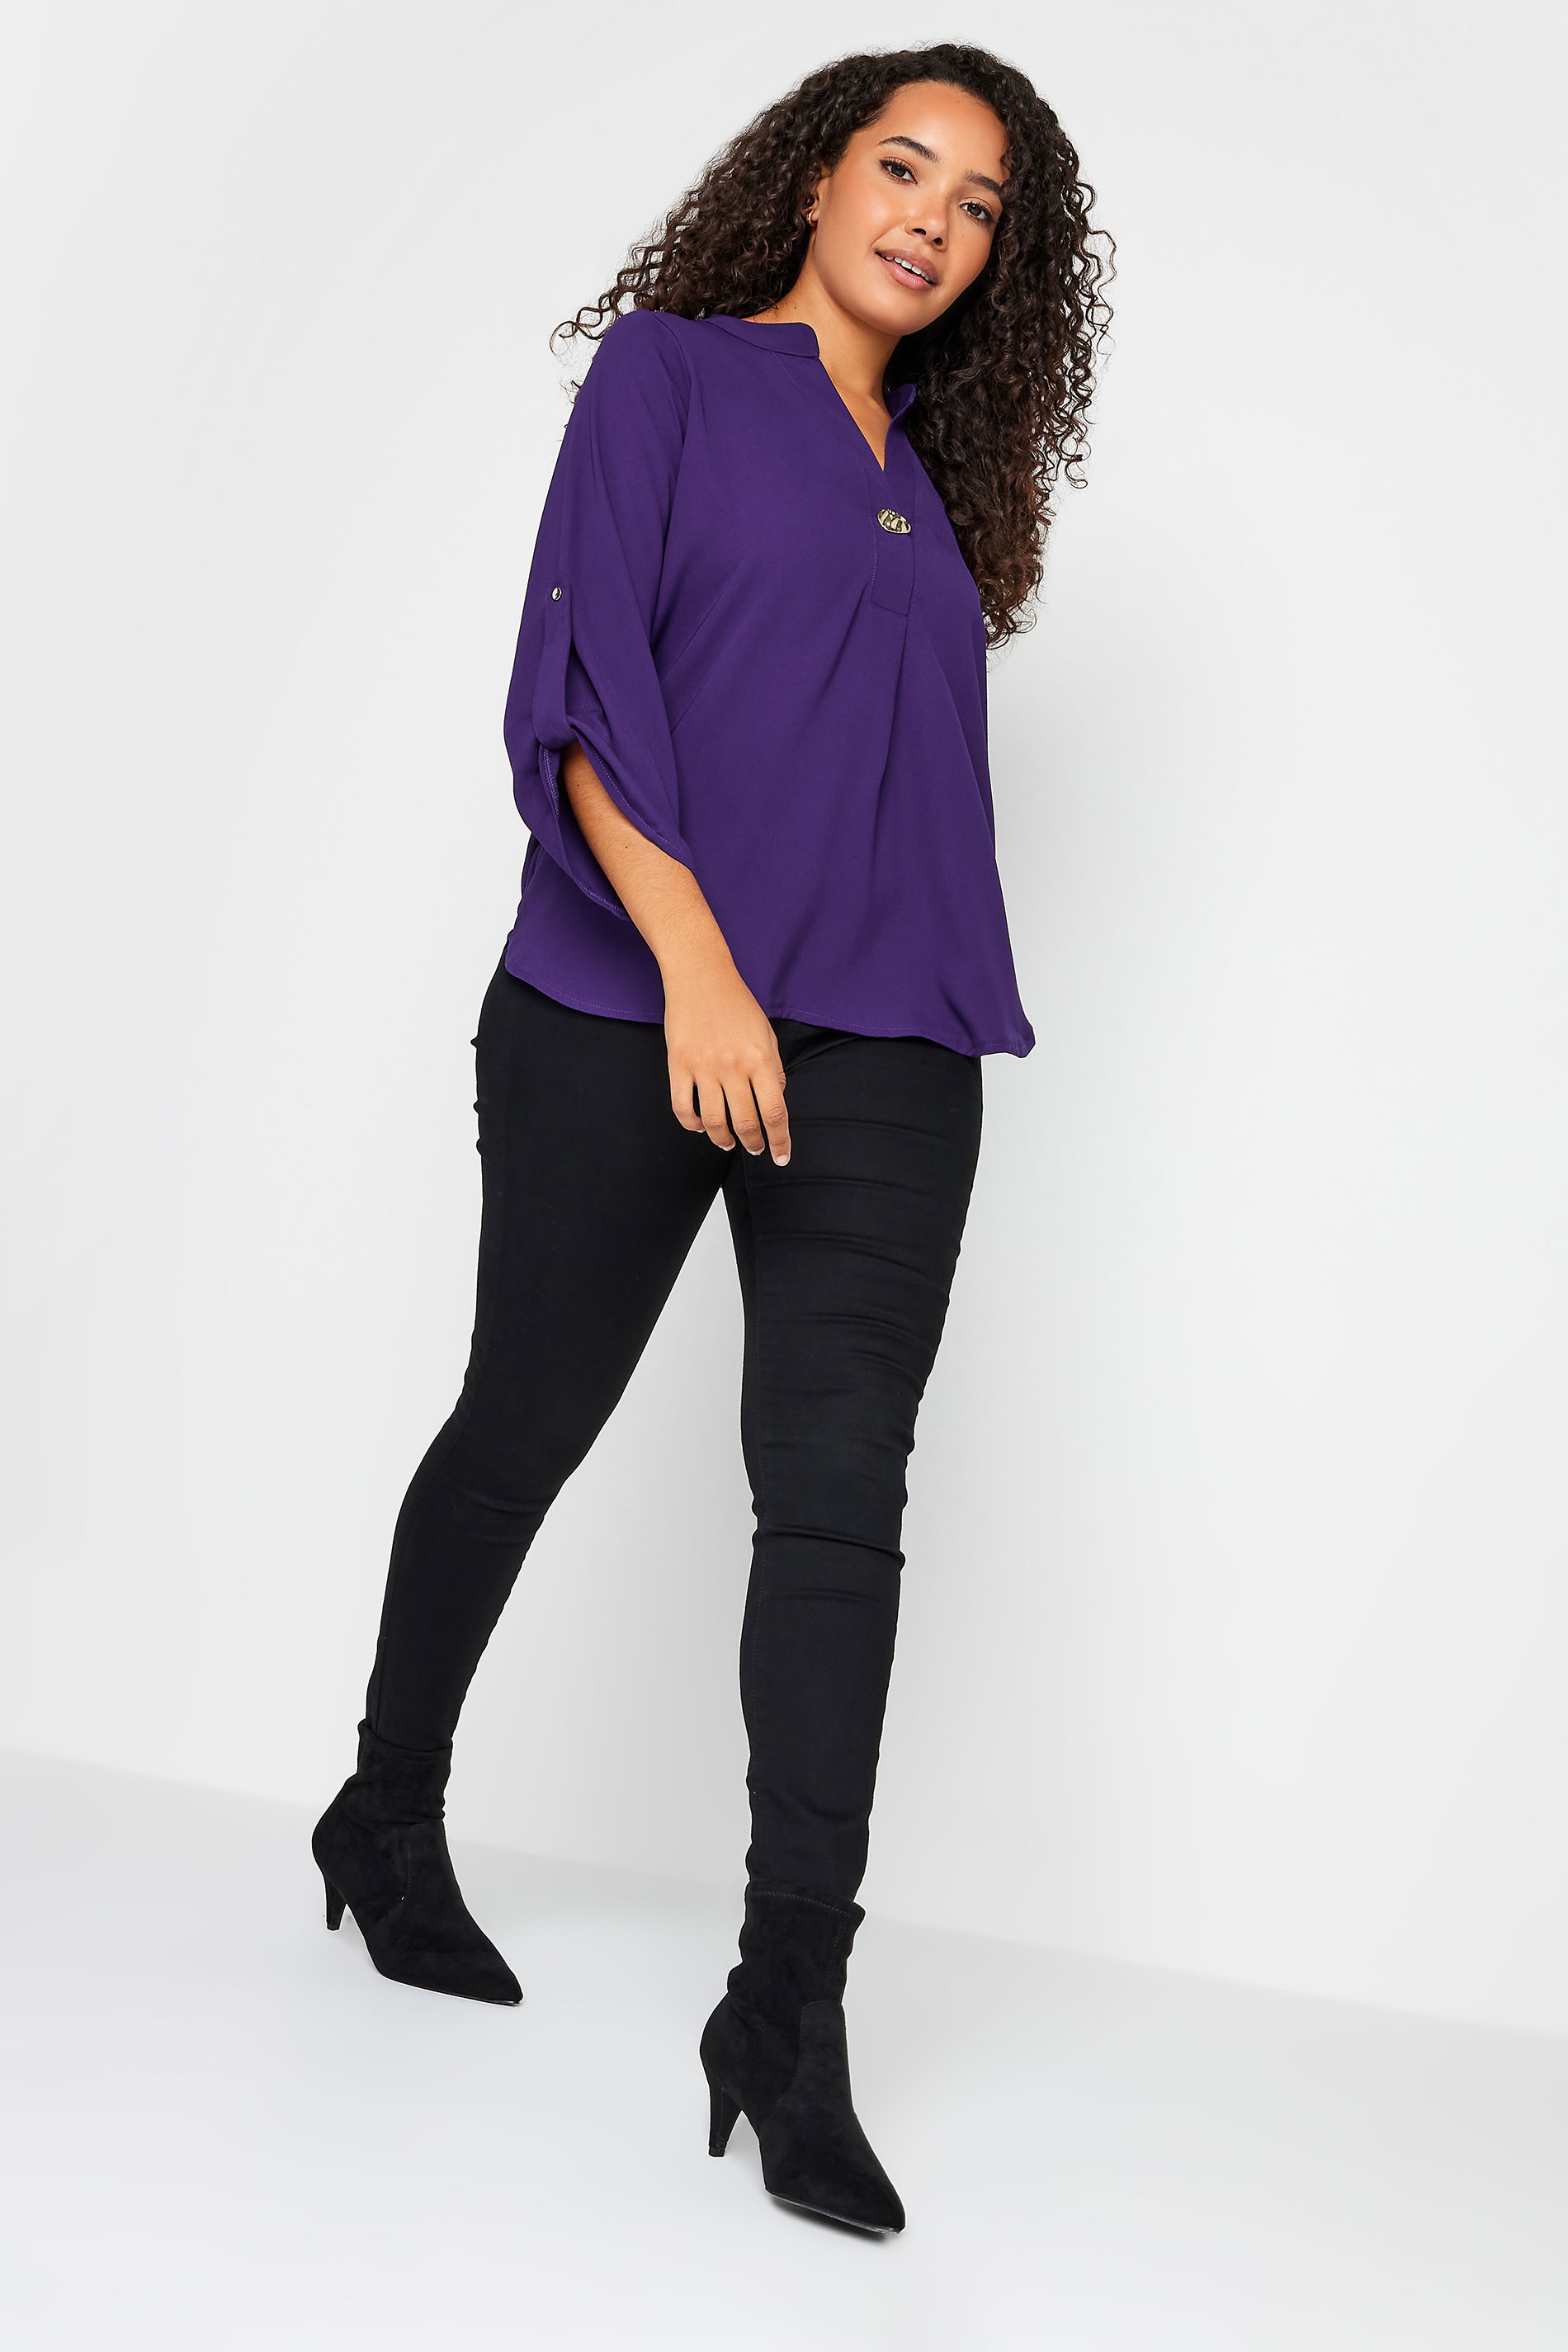 M&Co Purple Statement Button Tab Sleeve Shirt | M&Co 3